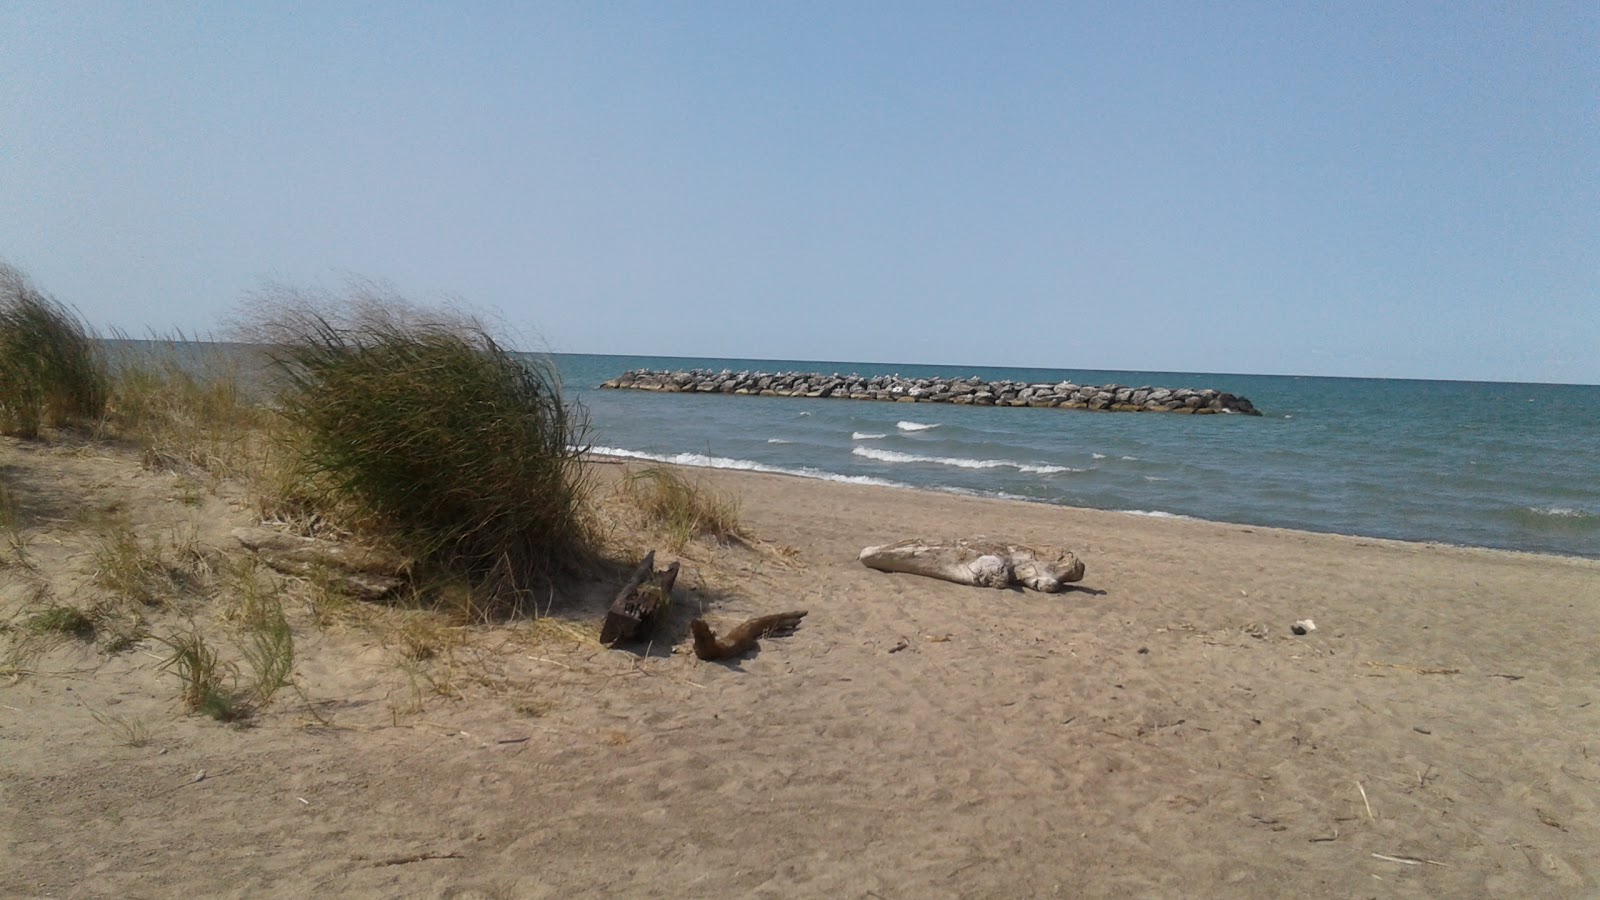 Foto de Erie Beach - lugar popular entre os apreciadores de relaxamento